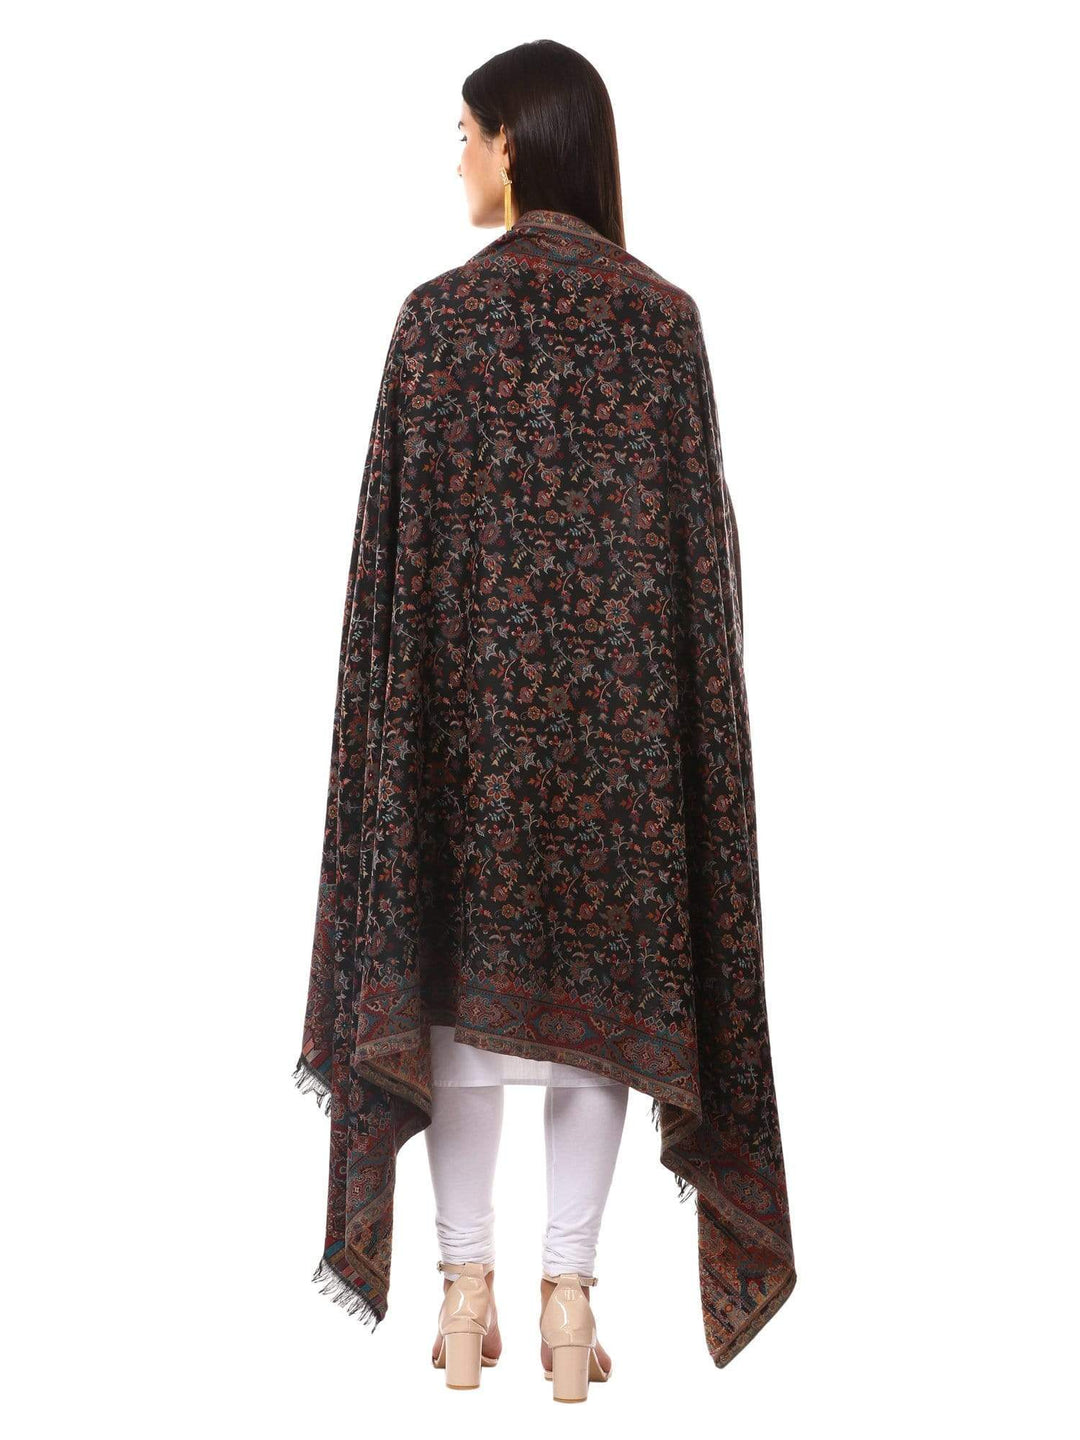 Pashtush India 100x200 Woven Kaani Shawl, Faux Pashmina Shawl, Soft and Warm (Black)